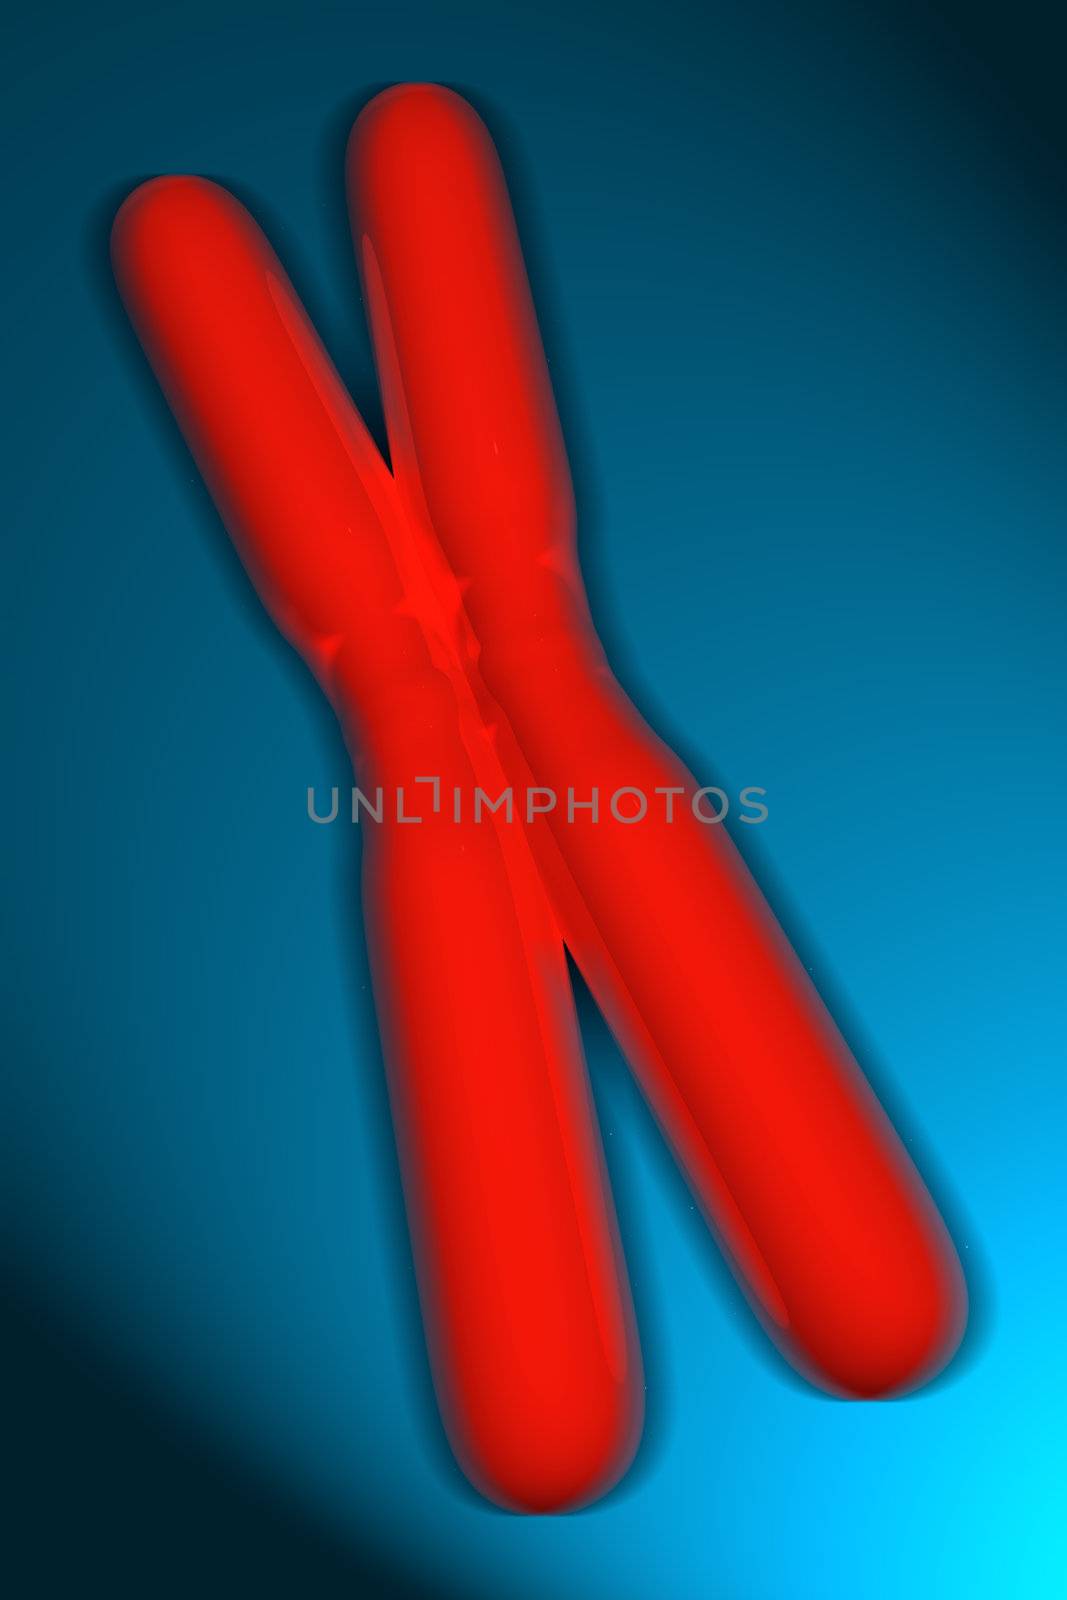 Human Chromosome illustration by Geoarts